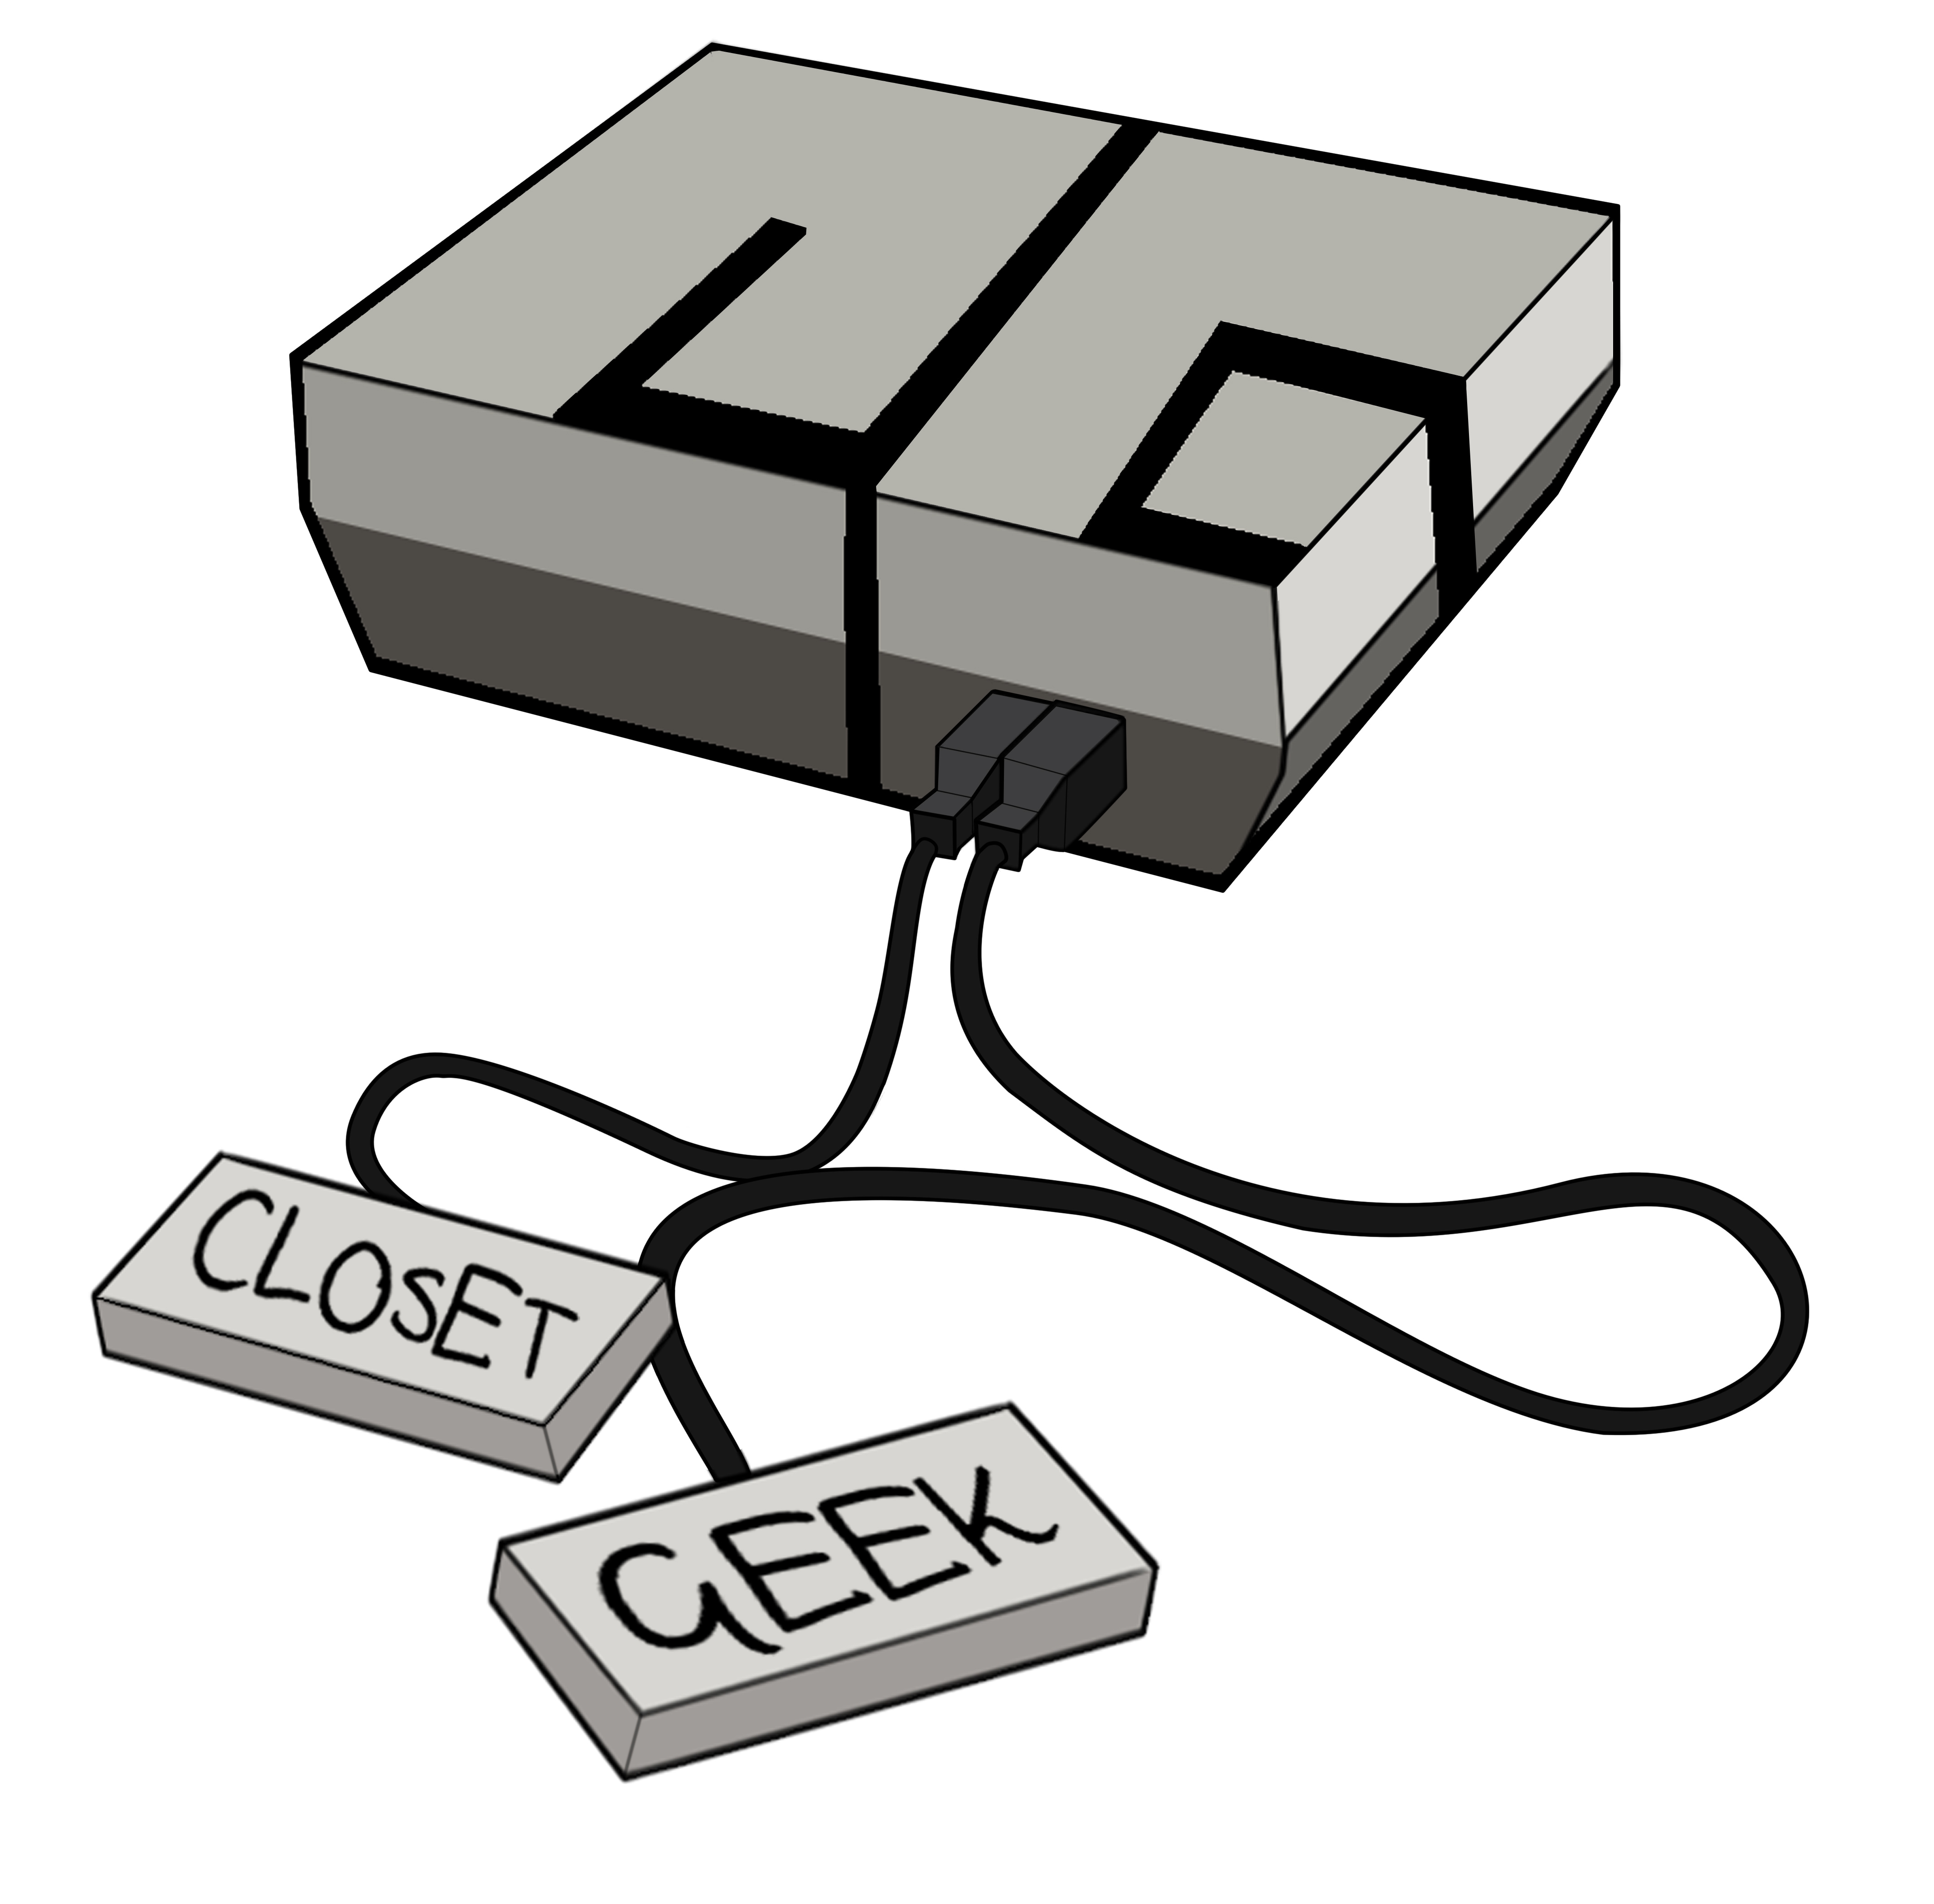 The Closet Geek 131: Video Game Push Over Man!